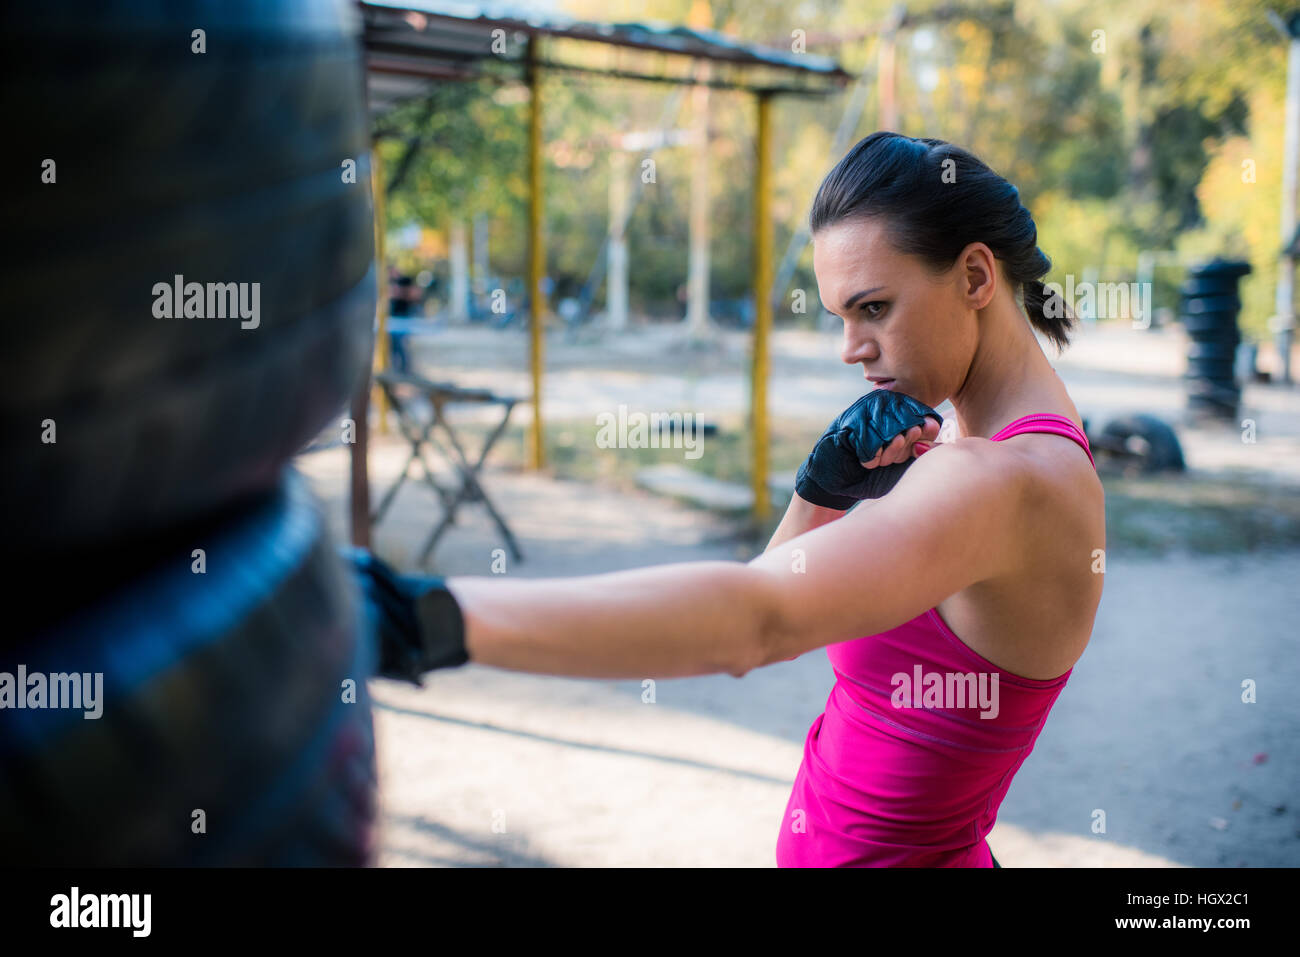 Frau Boxer Kreuz Kick im Freien arbeiten zu tun. Stockfoto